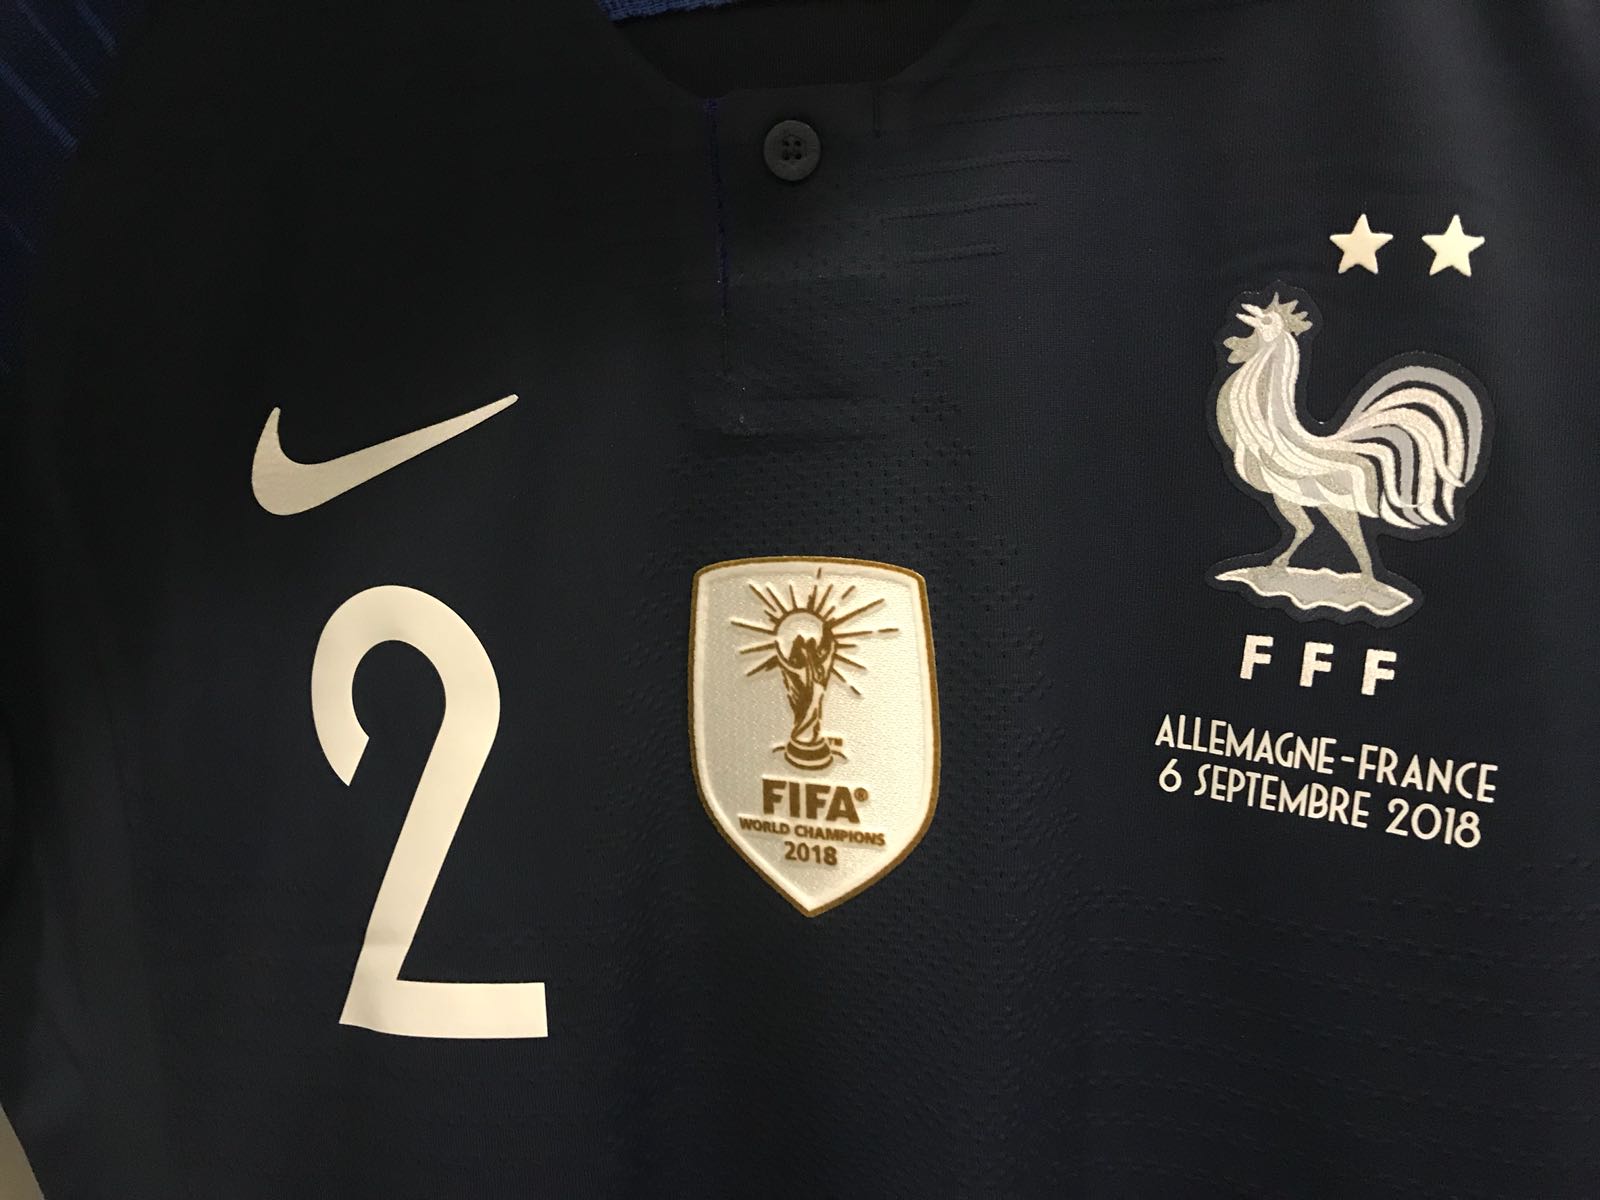 2018 Fifa World Champions Gold Badge